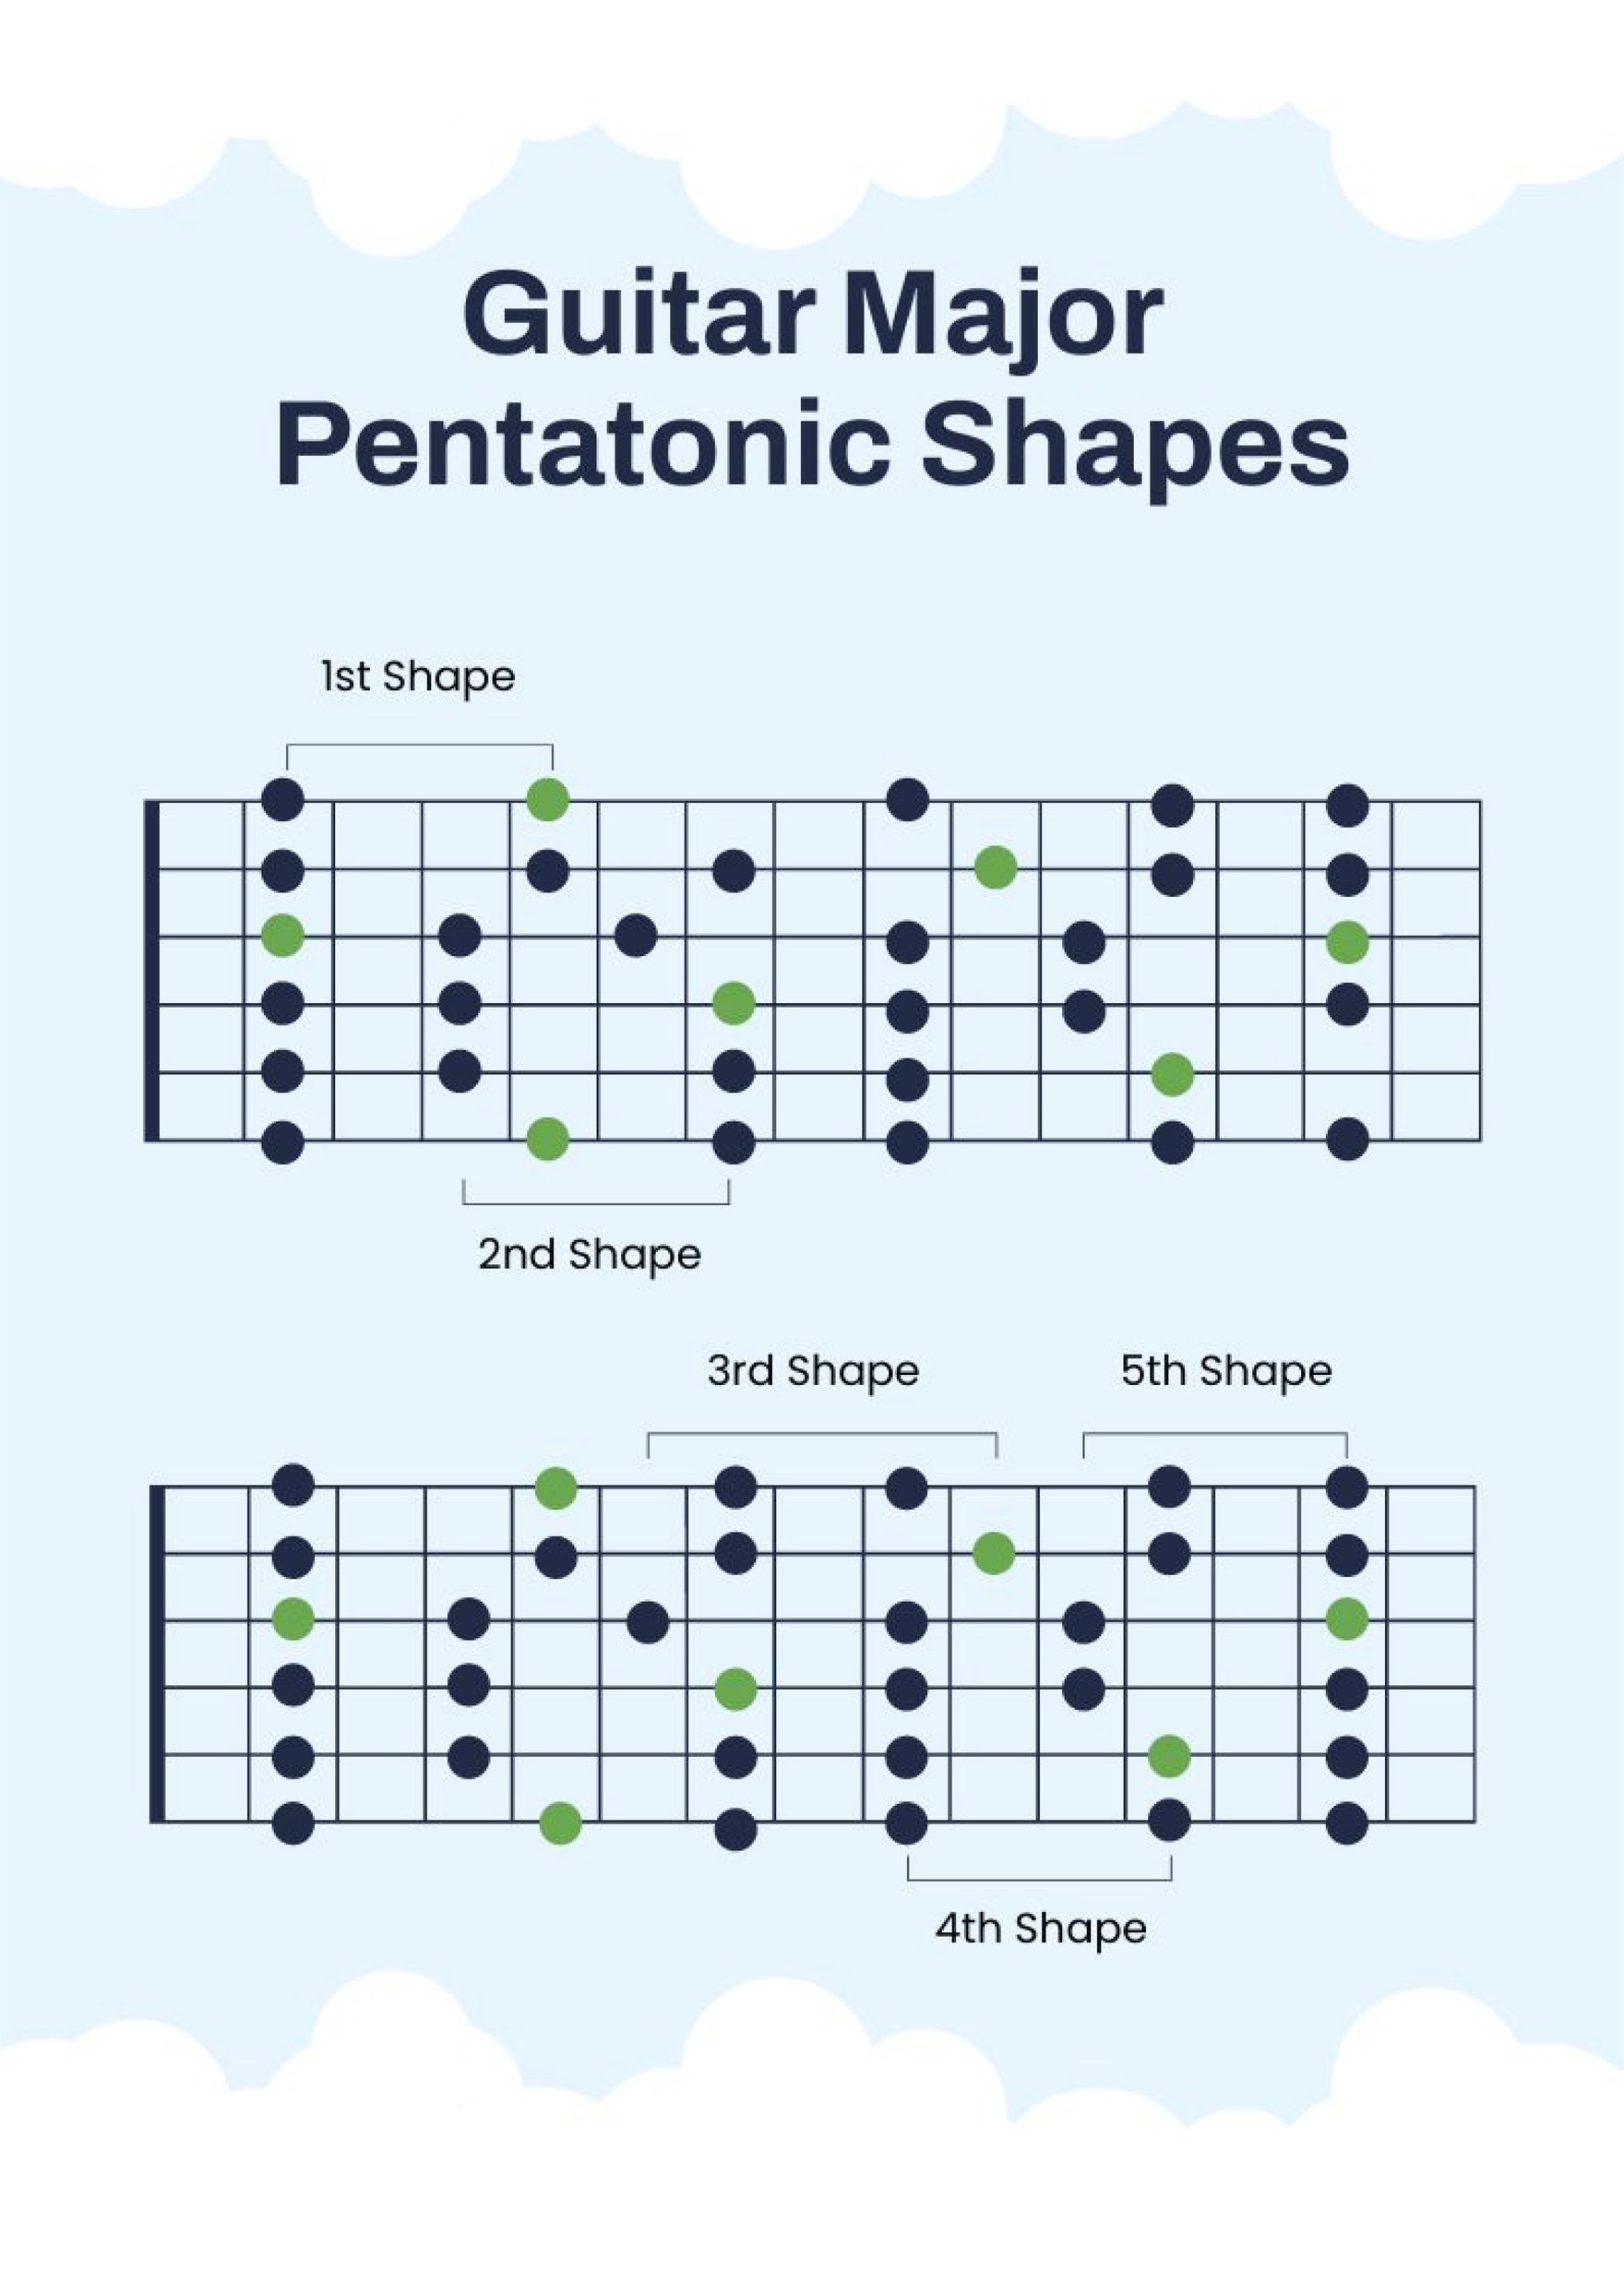 Guitar Major Pentatonic Scale 5 Shapes Chart in PDF, Illustrator